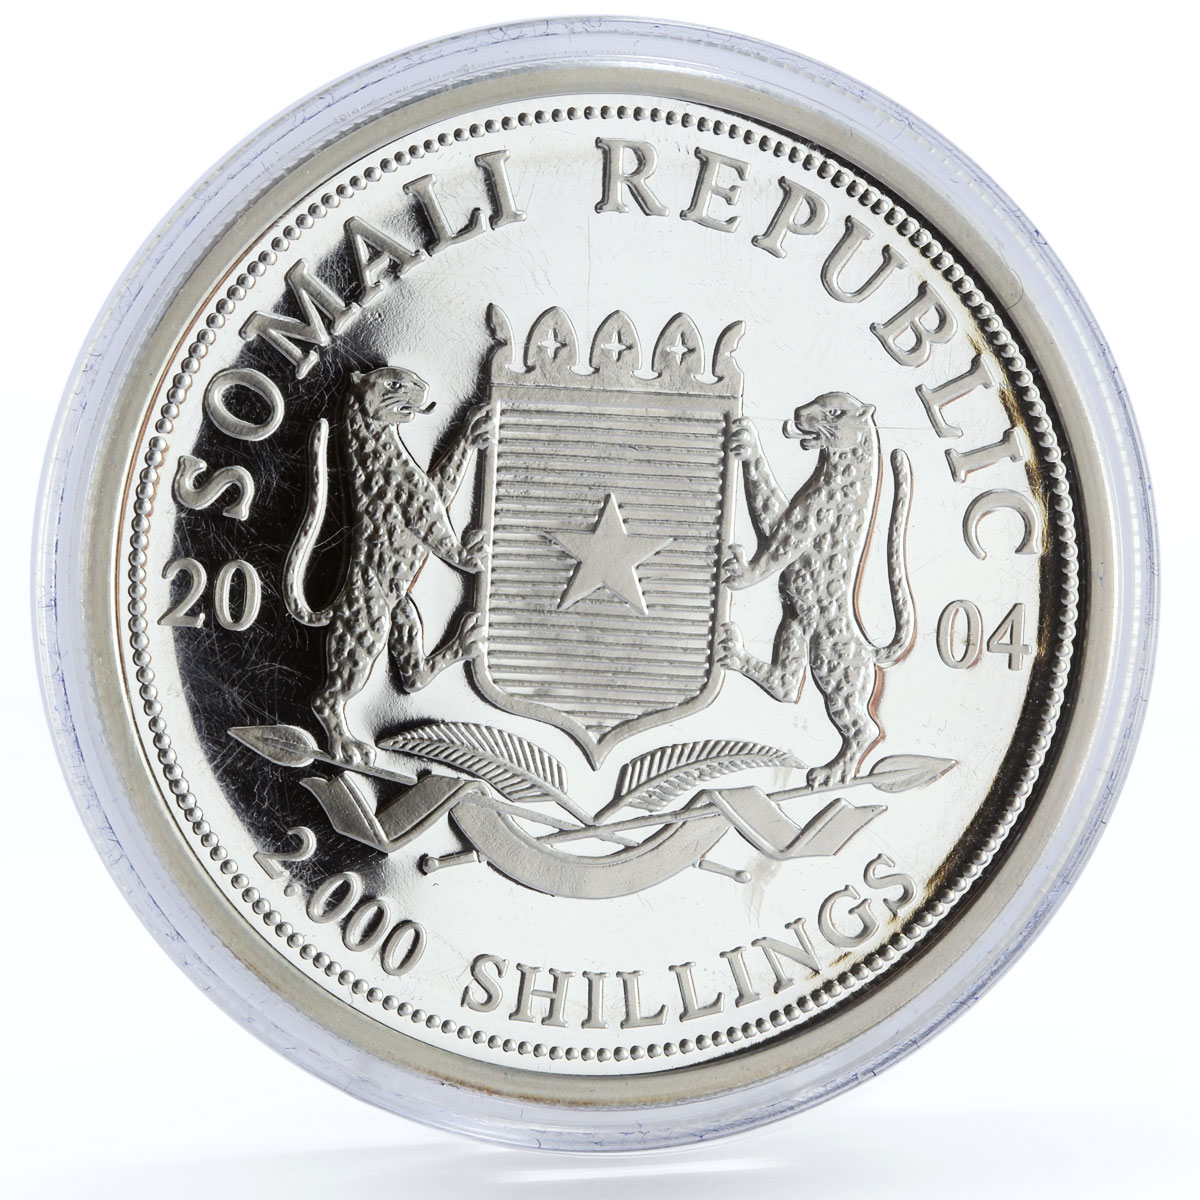 Somalia 2000 shillings African Wildlife Elephant Fauna silver coin 2004